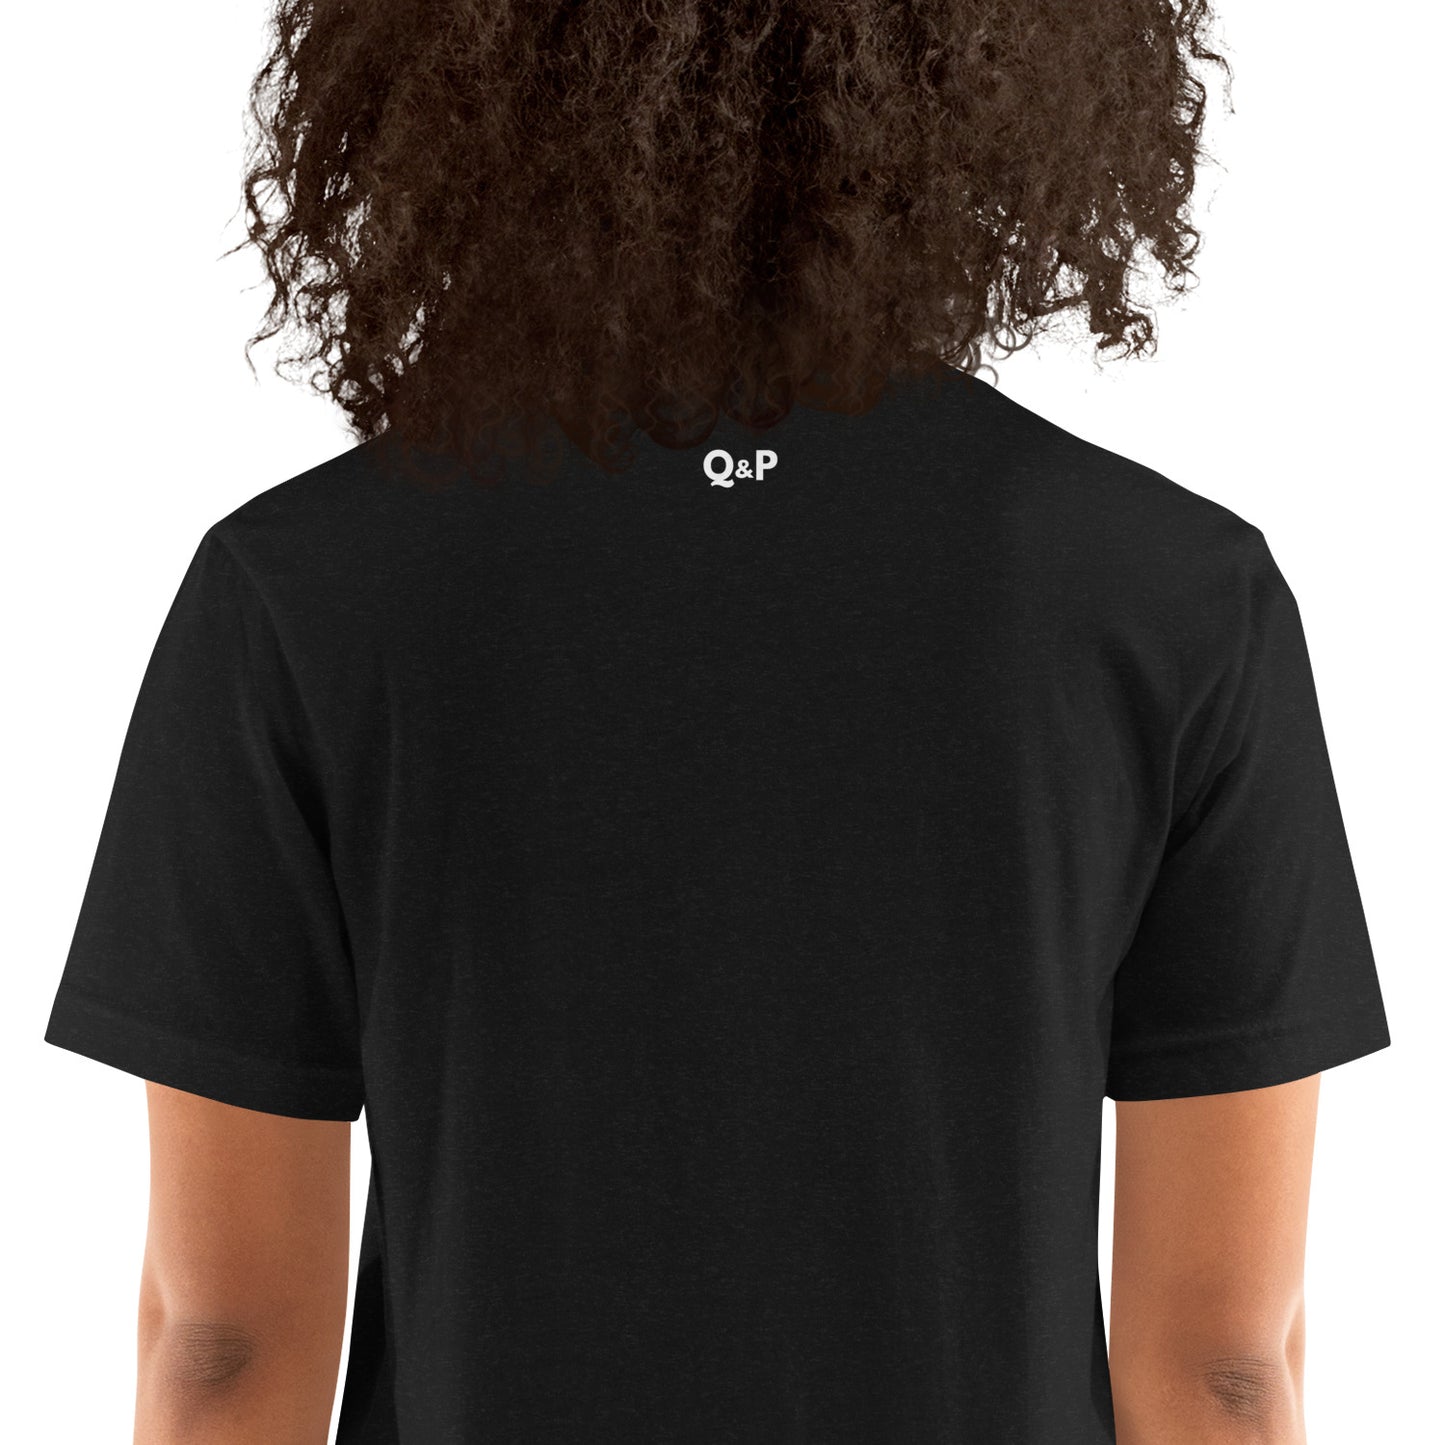 Straight Outta Evensong - Unisex T-shirt